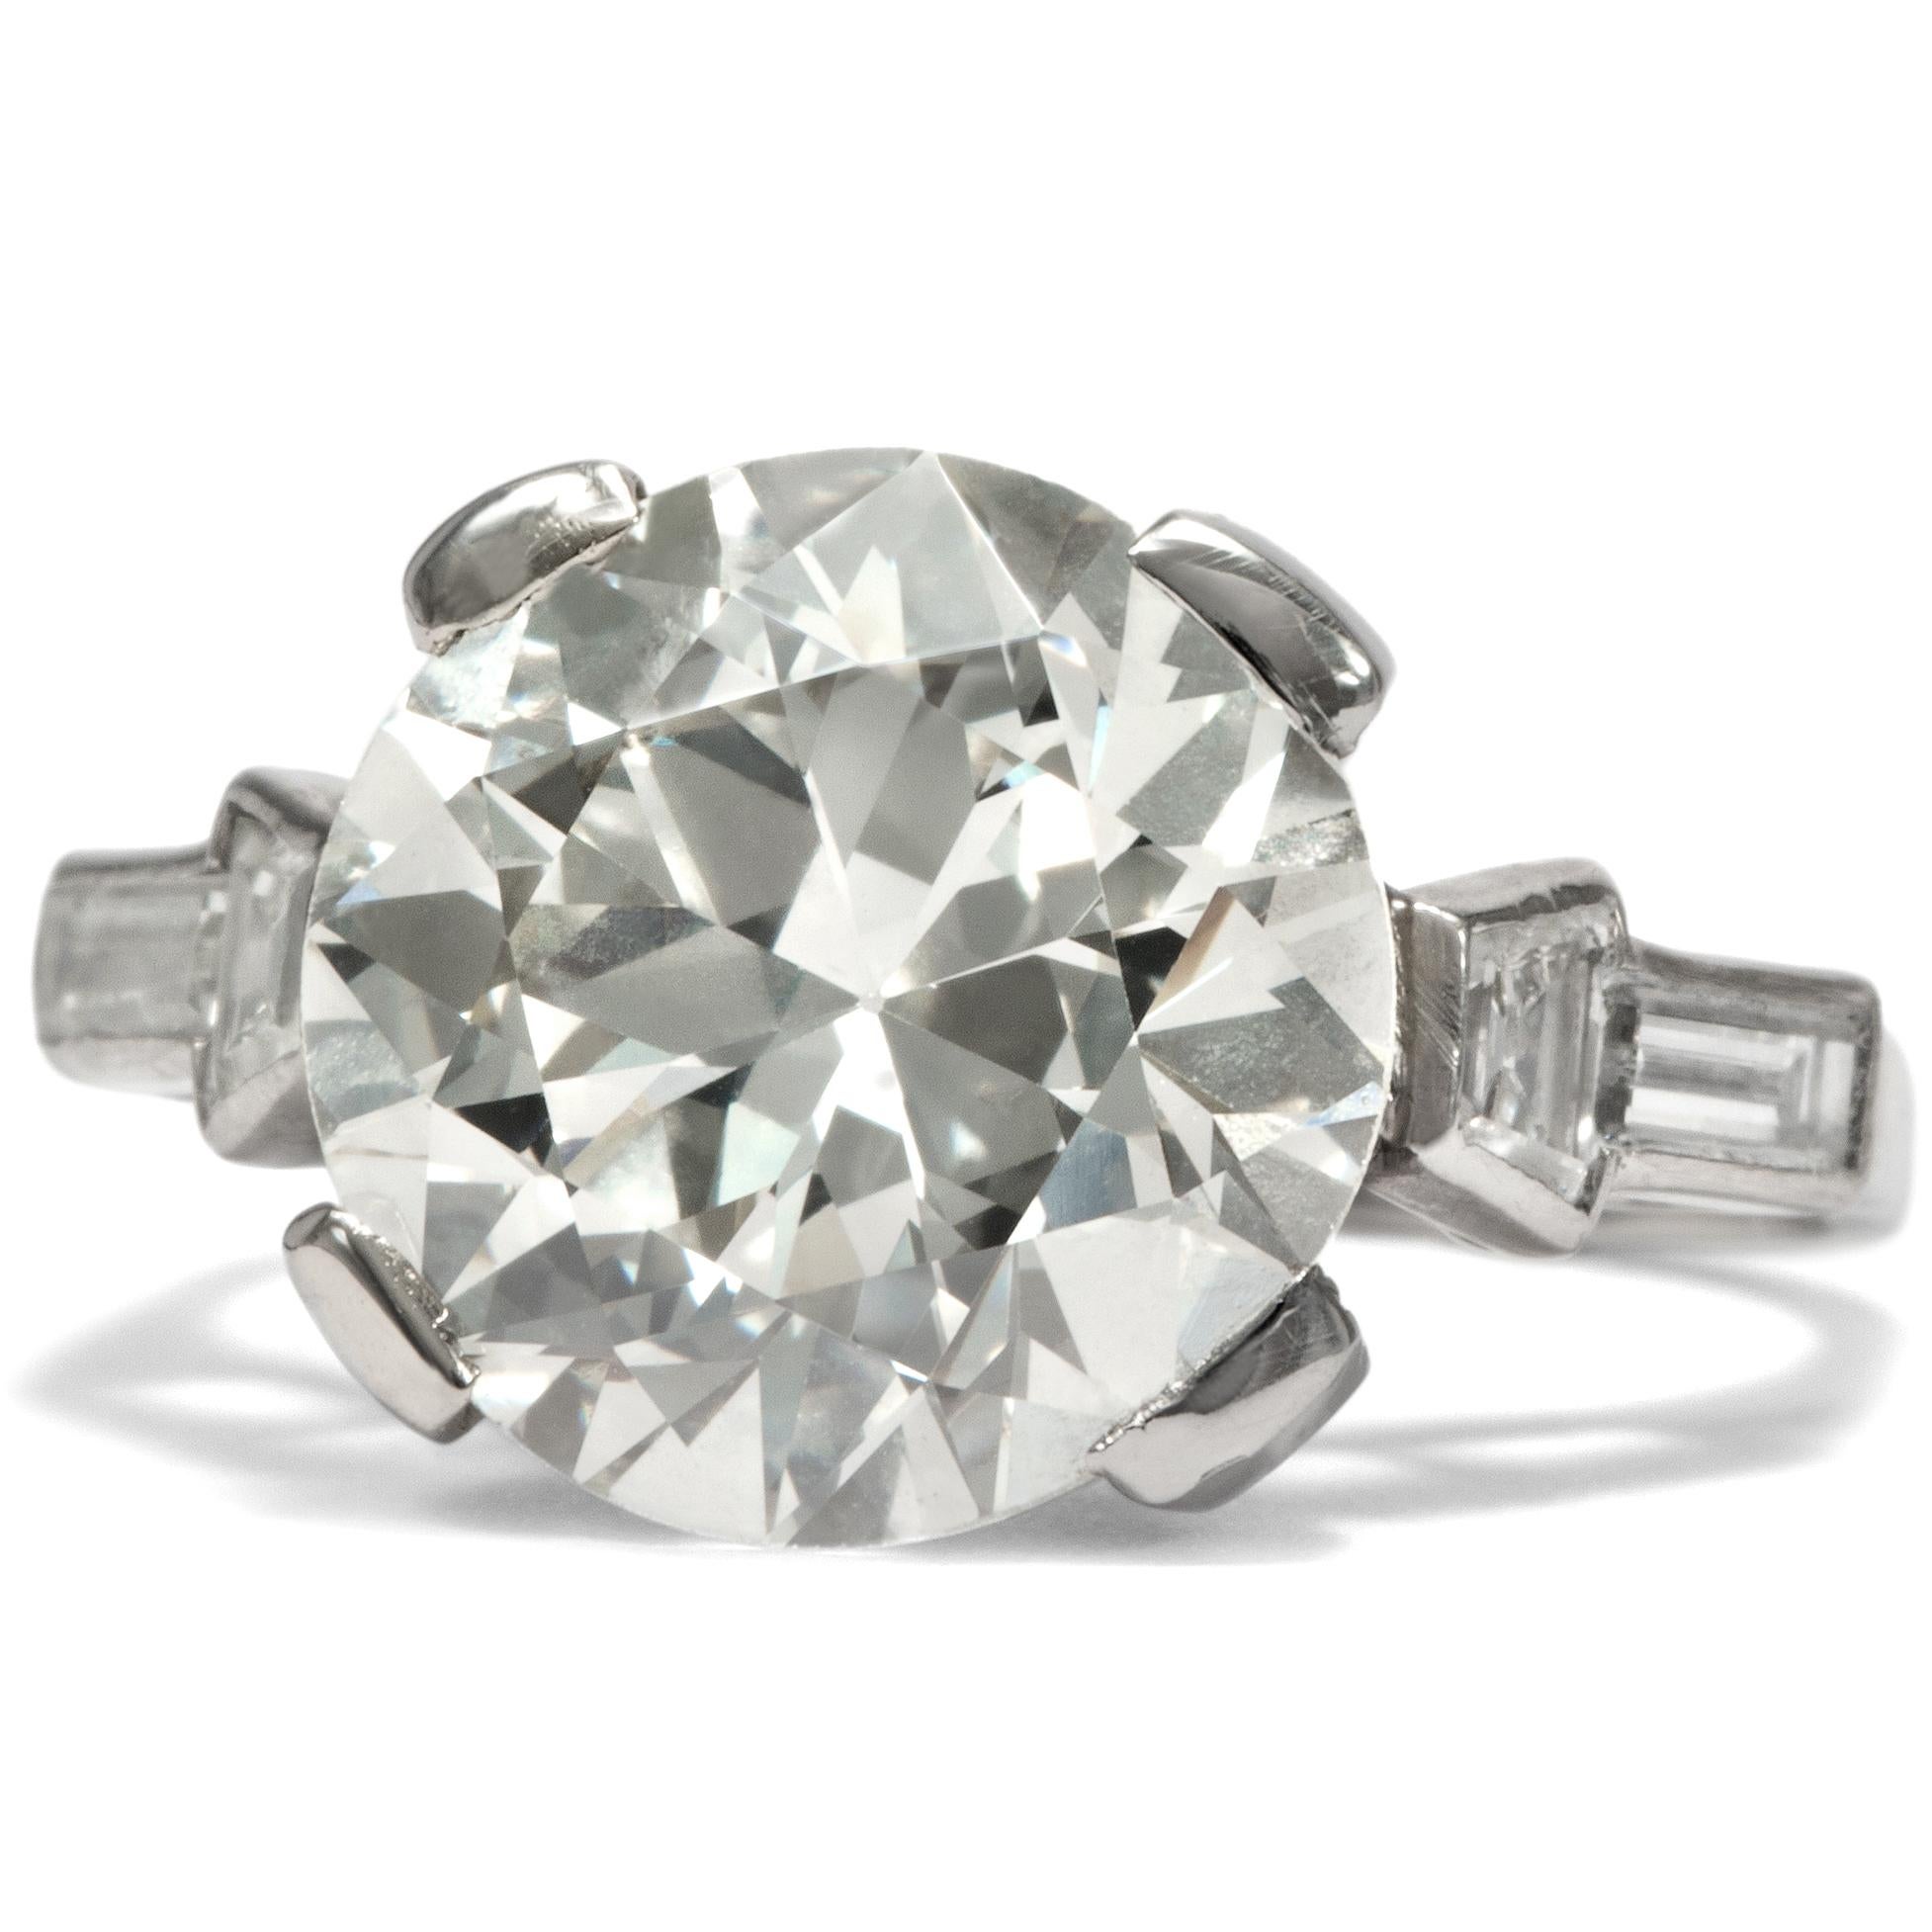 Brilliant Cut Art Deco circa 1940, Certified 4.74 Brilliant Diamond Solitaire Engagement Ring